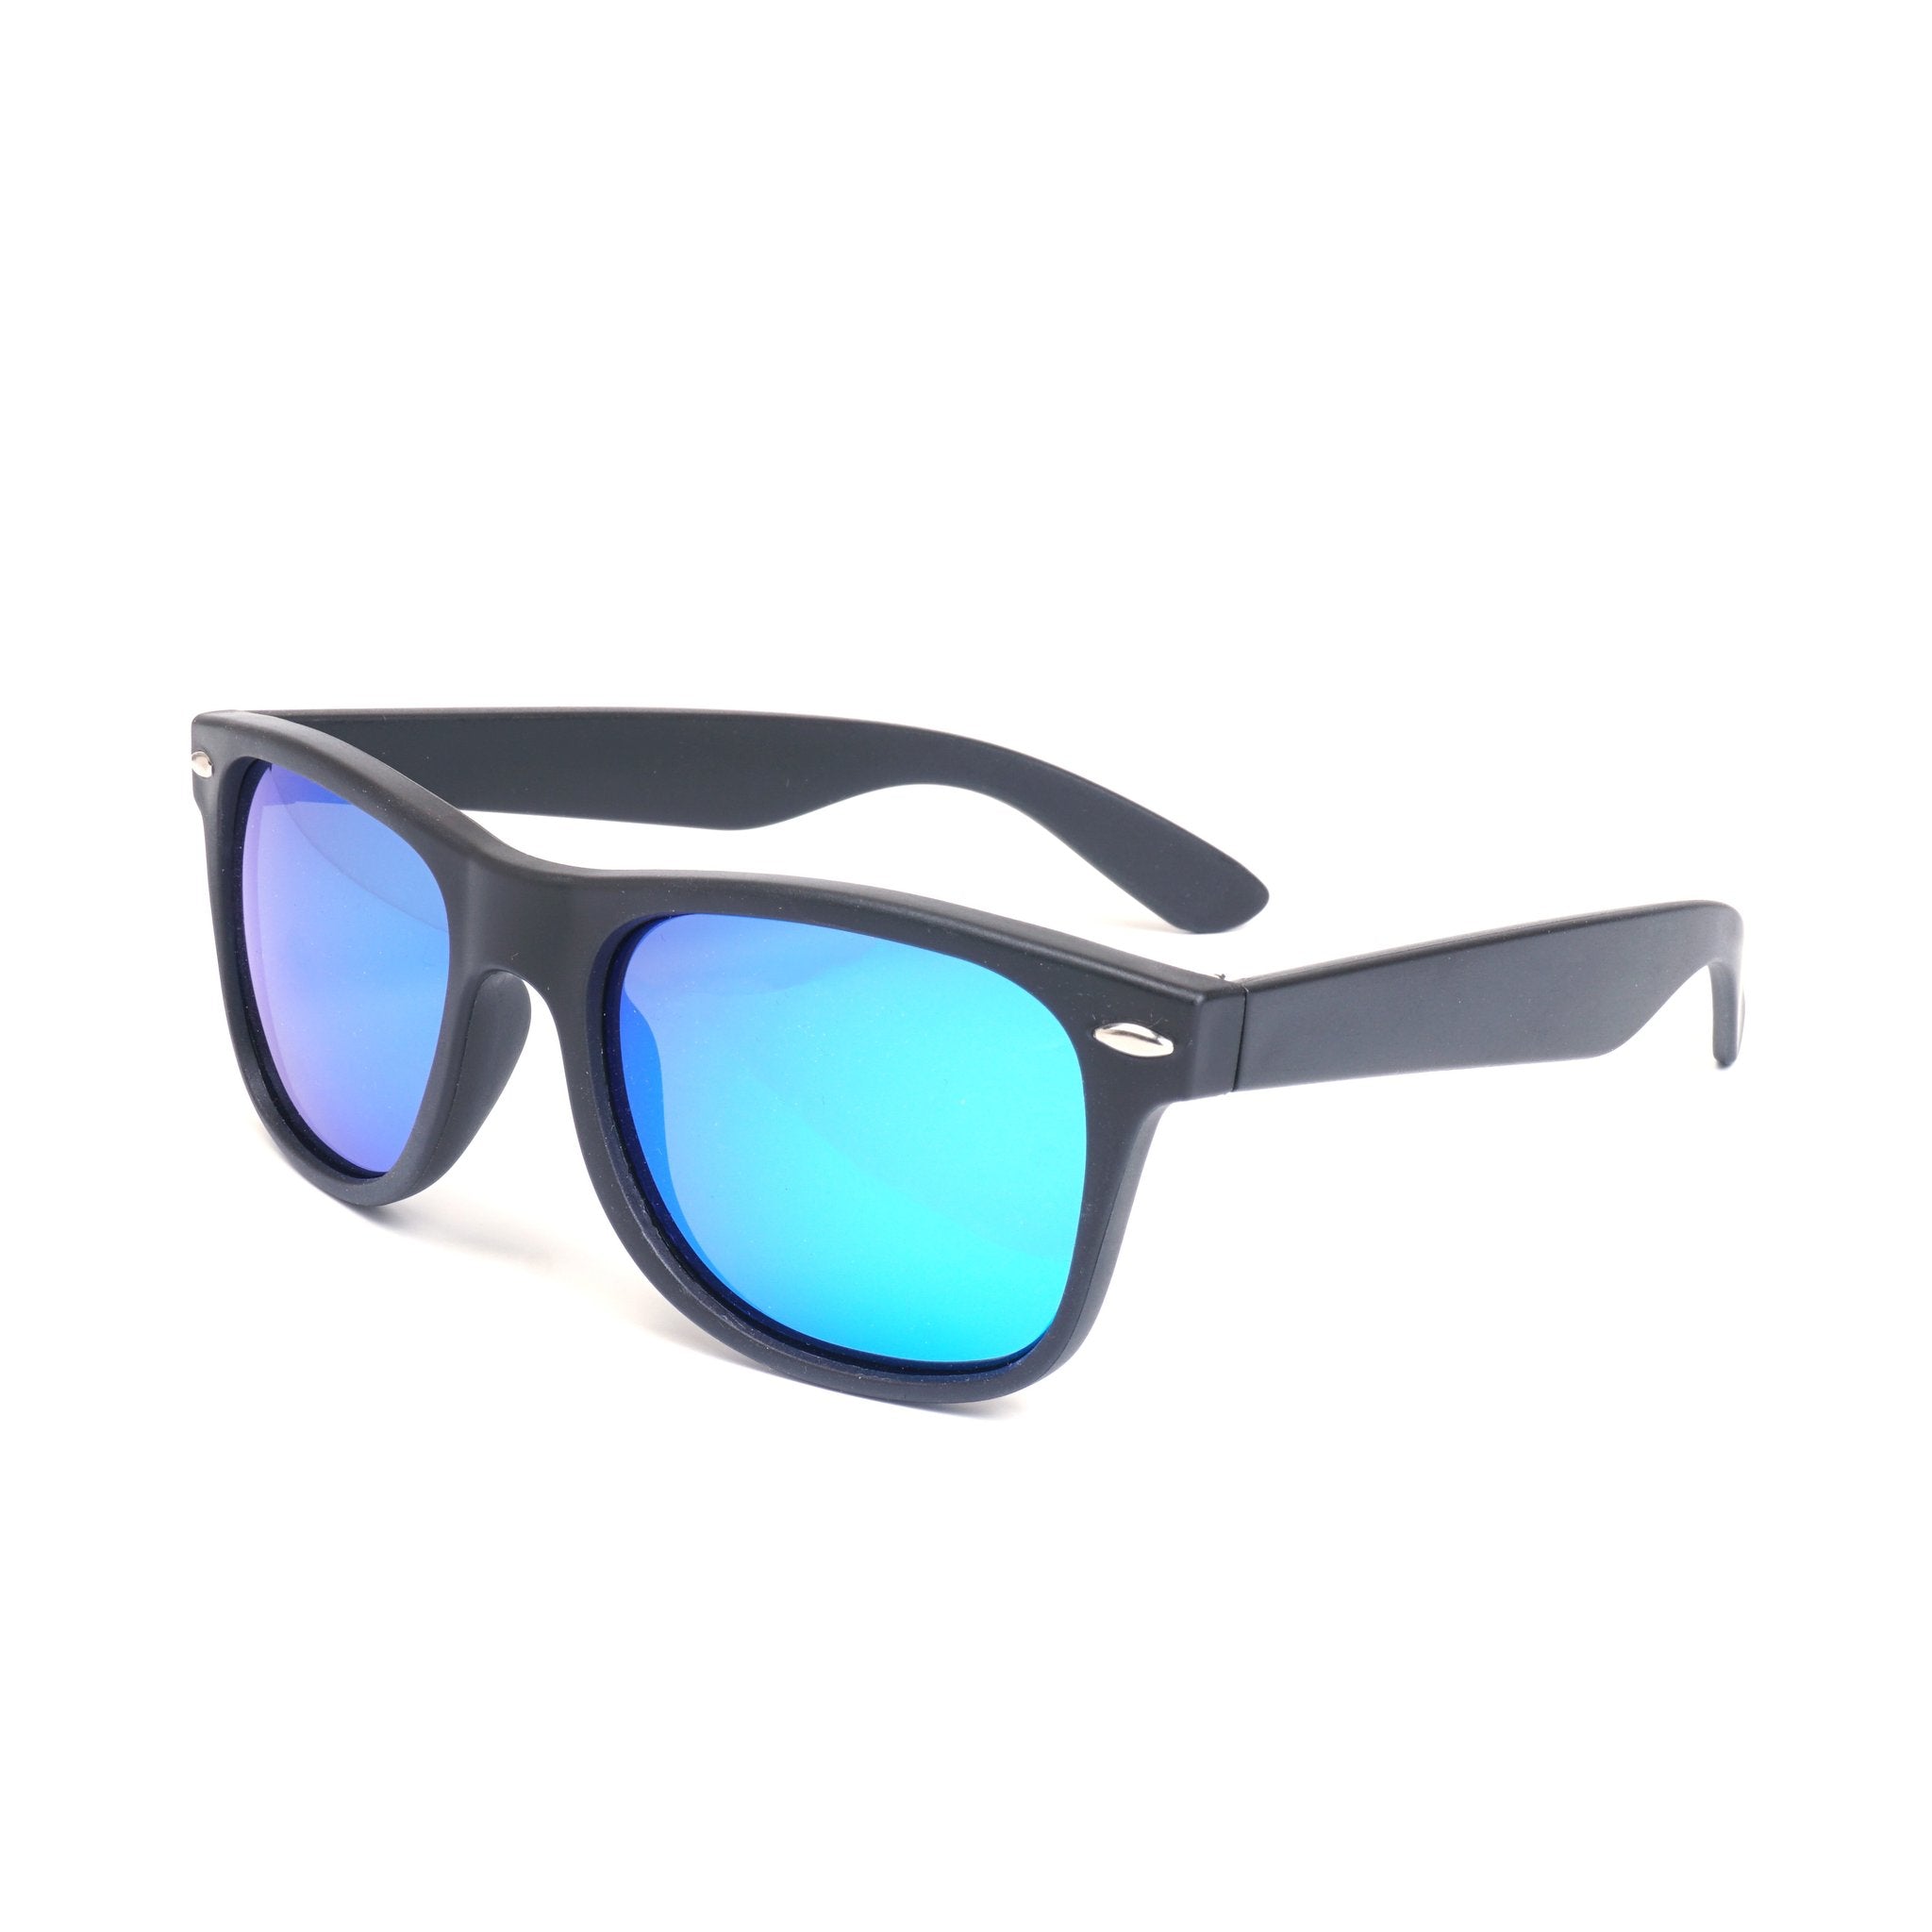 STAGE Rebel Floating Sunglasses - Blue Revo Lens